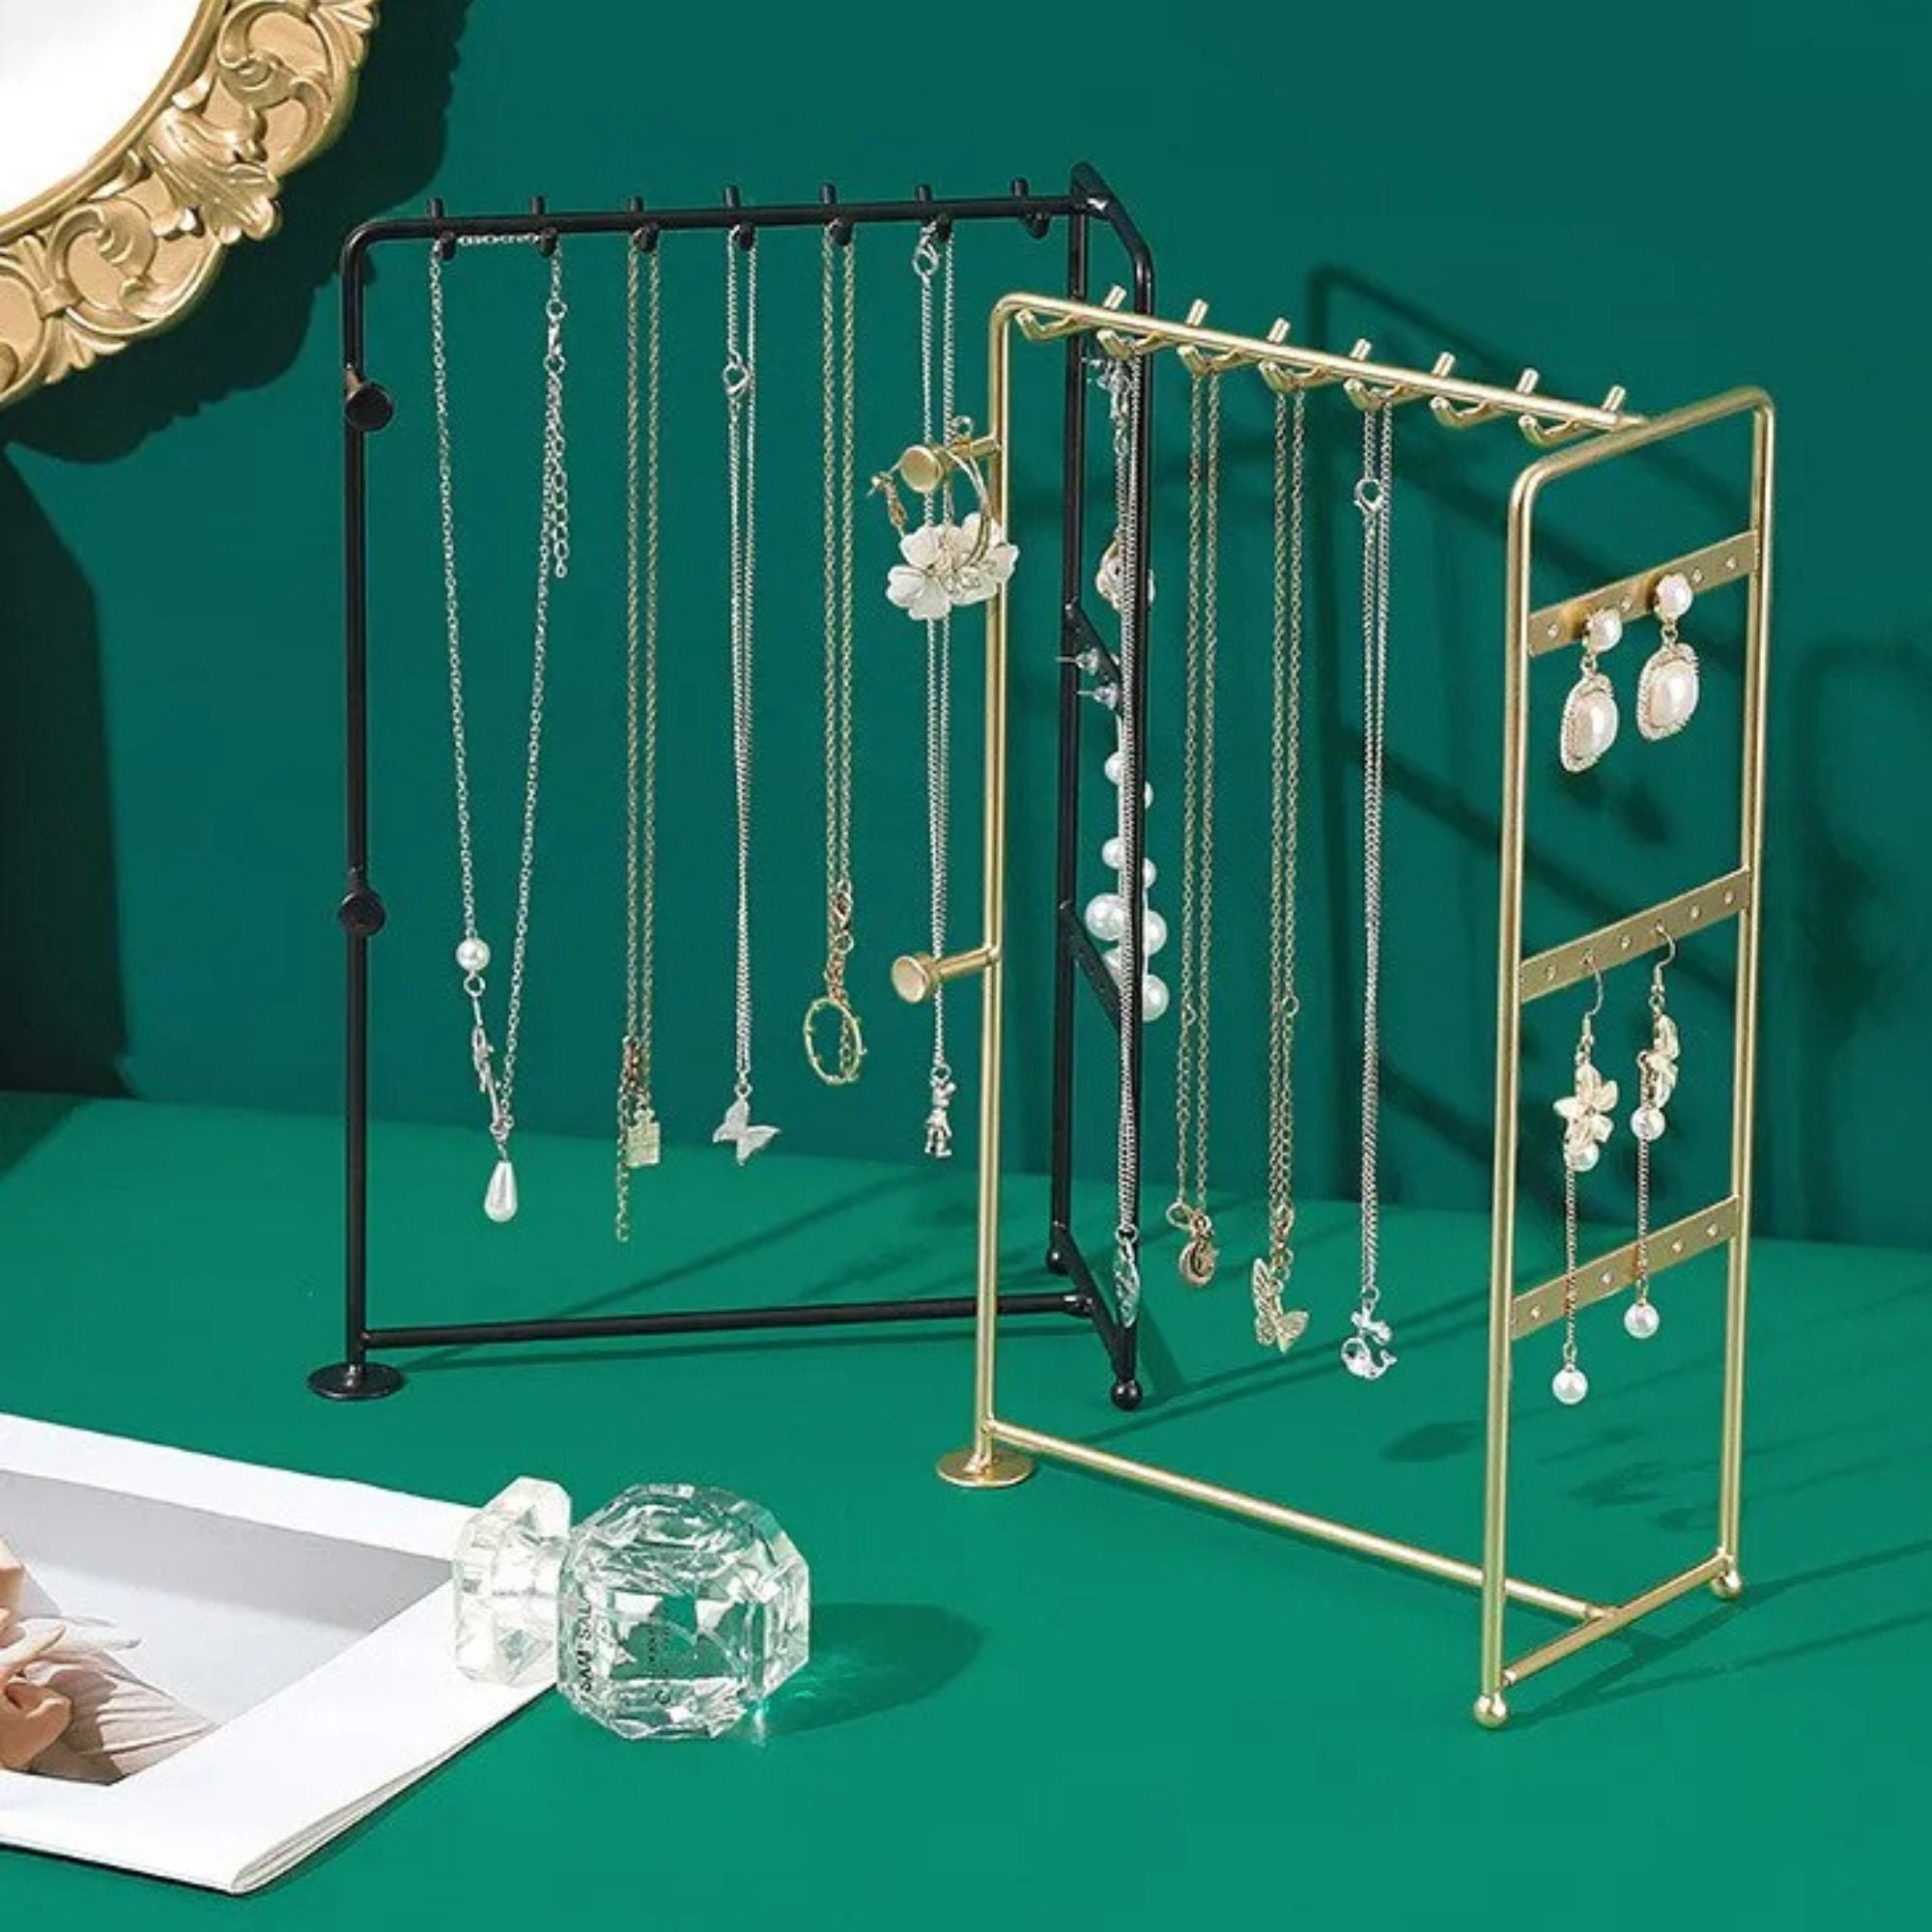 Cut Glass Beads Jewelry Holder Organizer Necklace Tree Stand